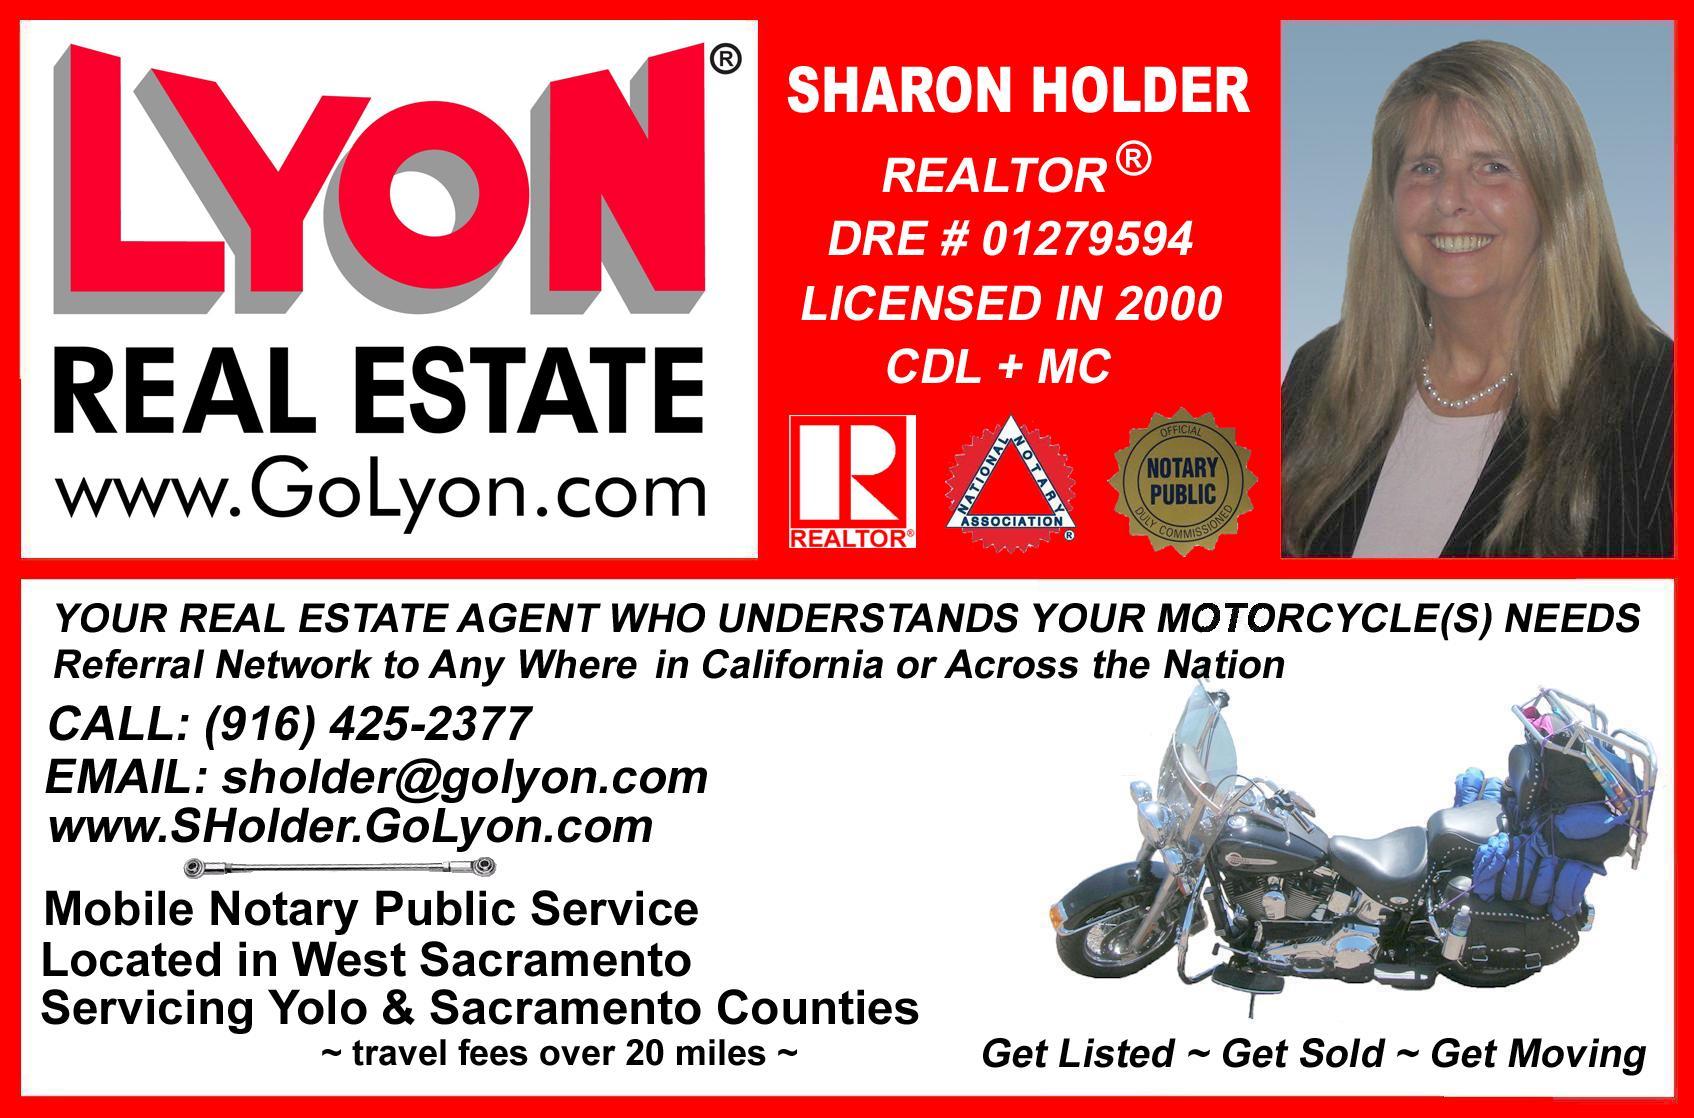 Sharon Holder, Realtor, Greater Sacramento Area